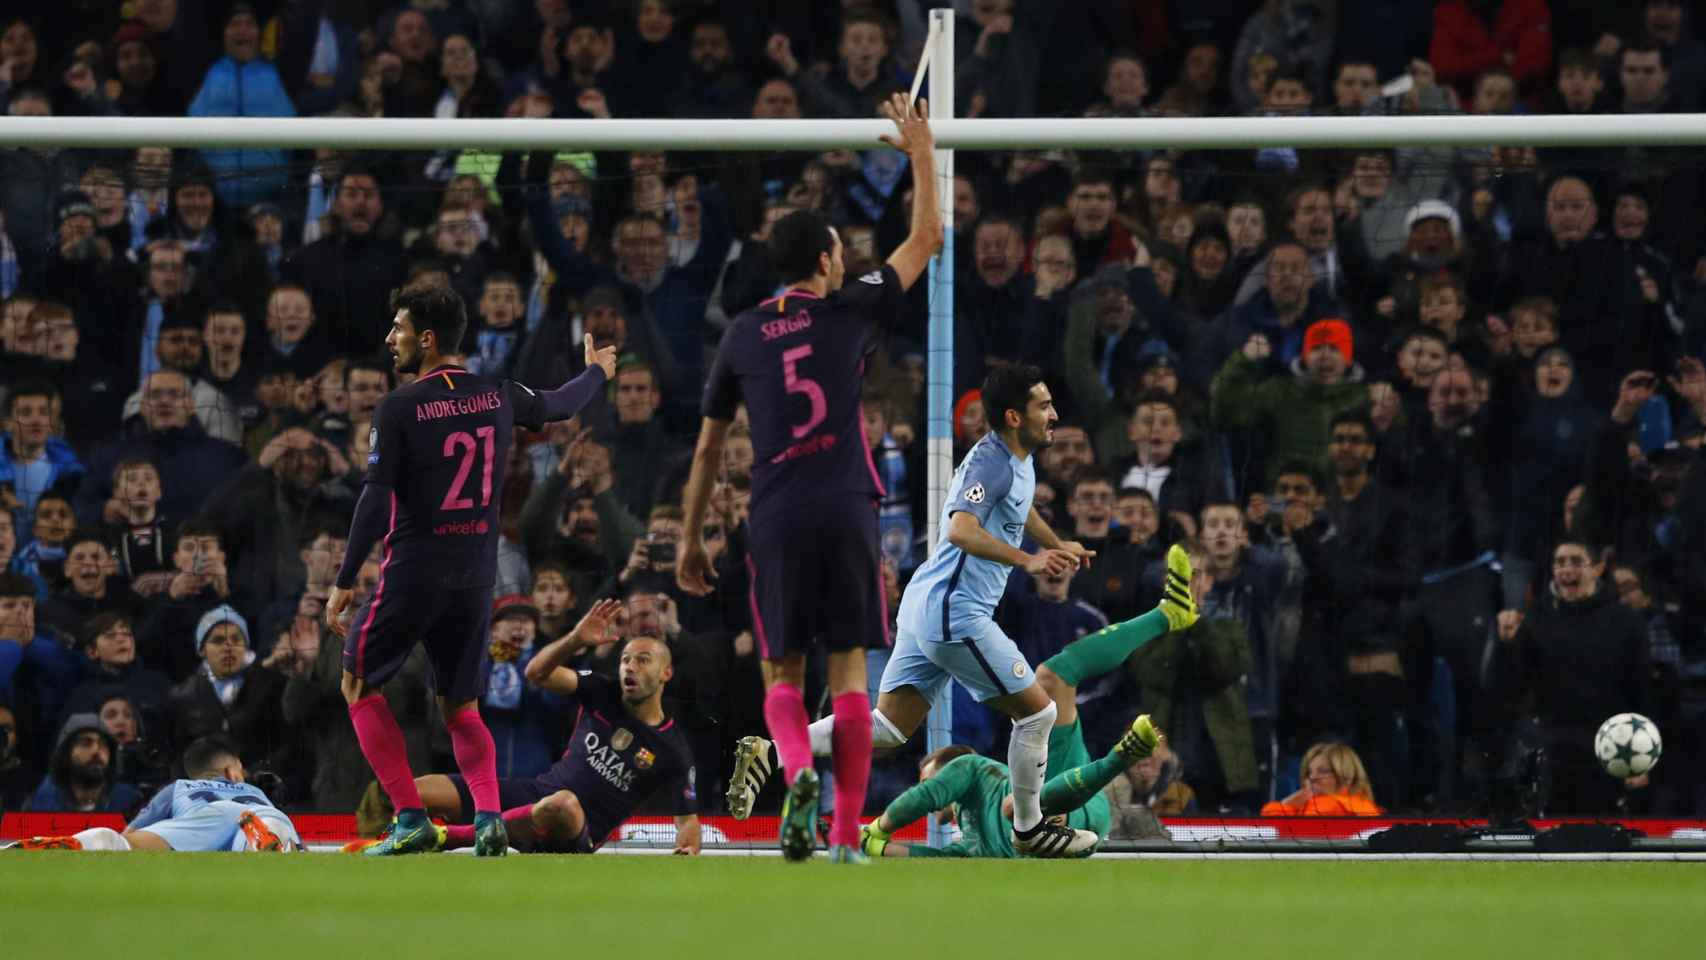 Manchester City's Ilkay Gundogan celebrates scoring their third goal